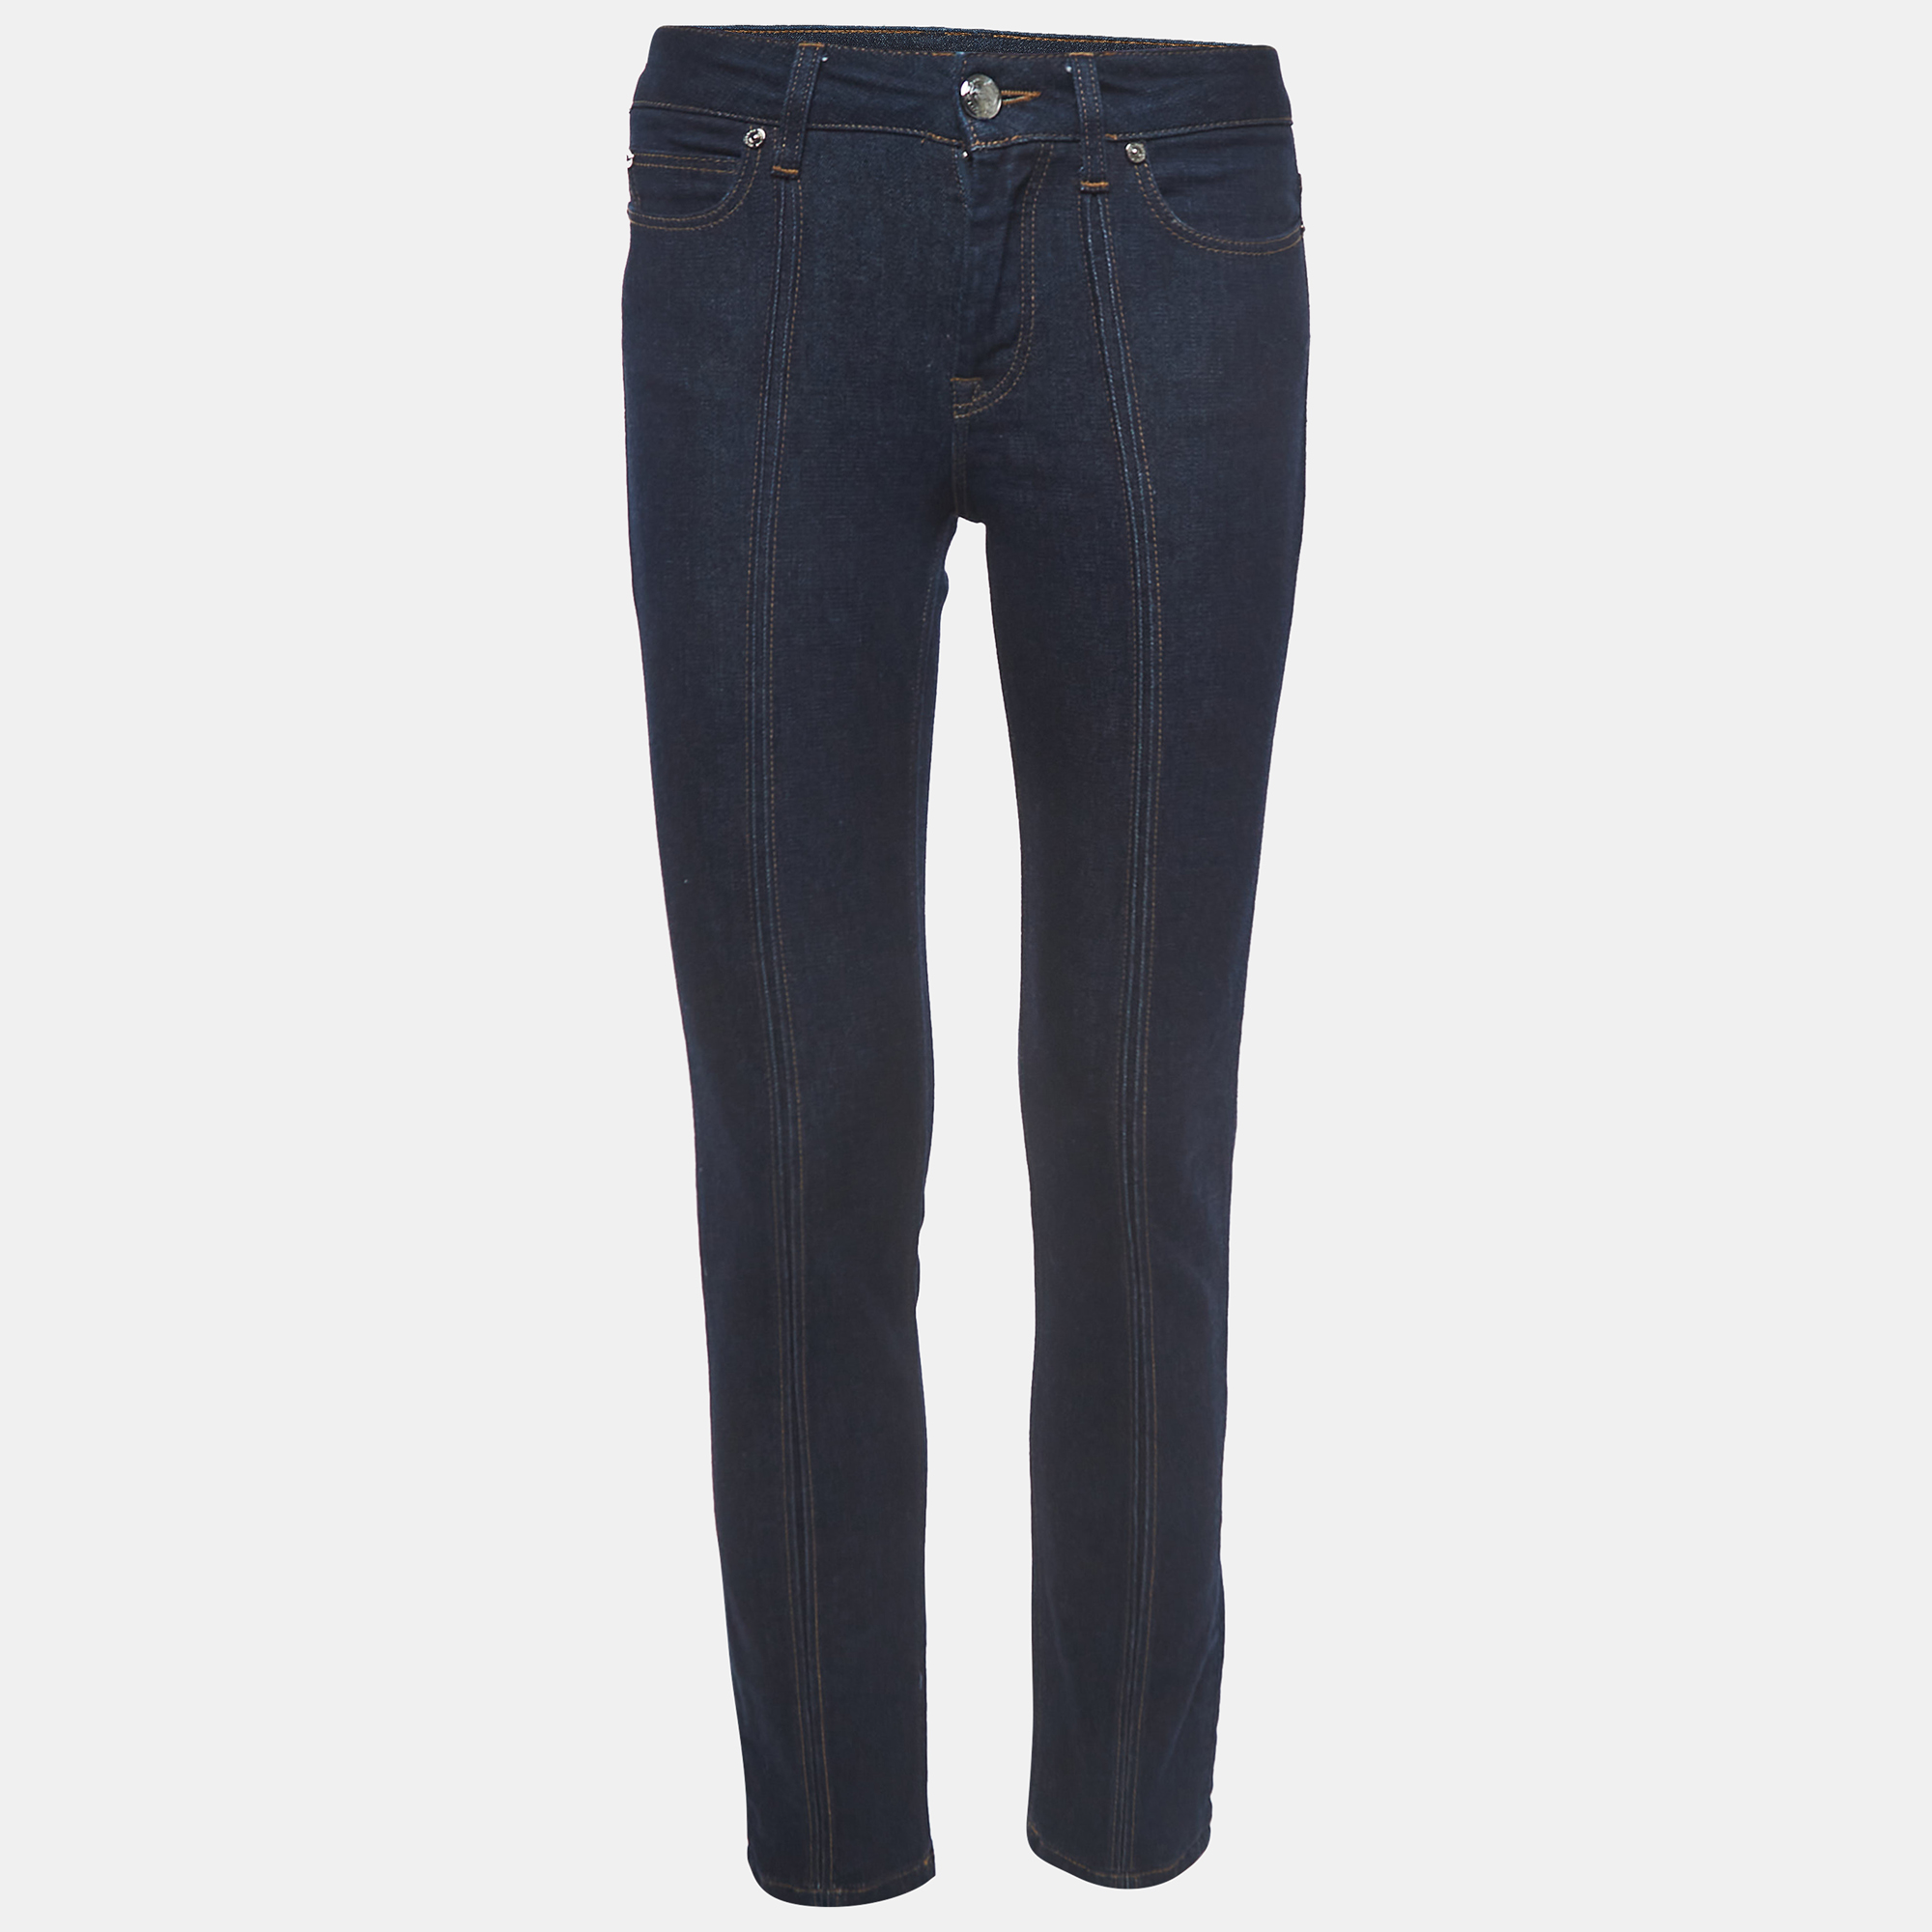 Pre-owned Burberry Blue Denim Skinny Leg Jeans S Waist 26"